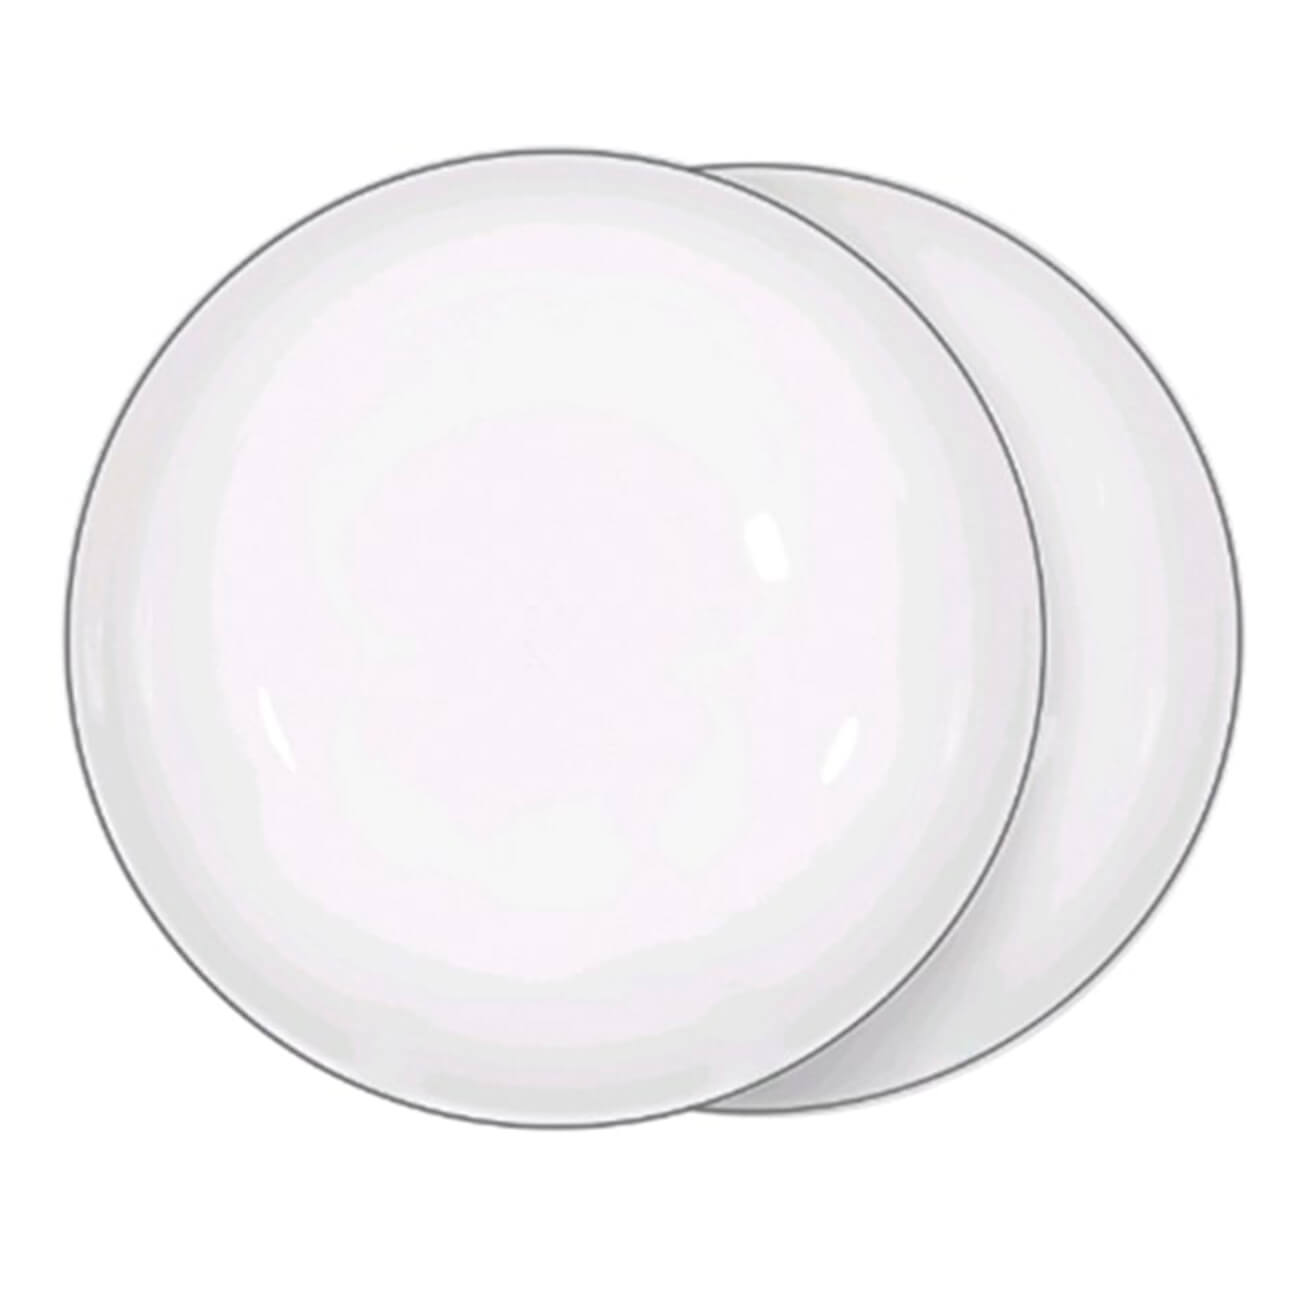 Тарелка суповая, 20х5 см, 2 шт, фарфор F, белая, Ideal silver kuchenland тарелка суповая 20х4 см 2 шт фарфор f antarctica